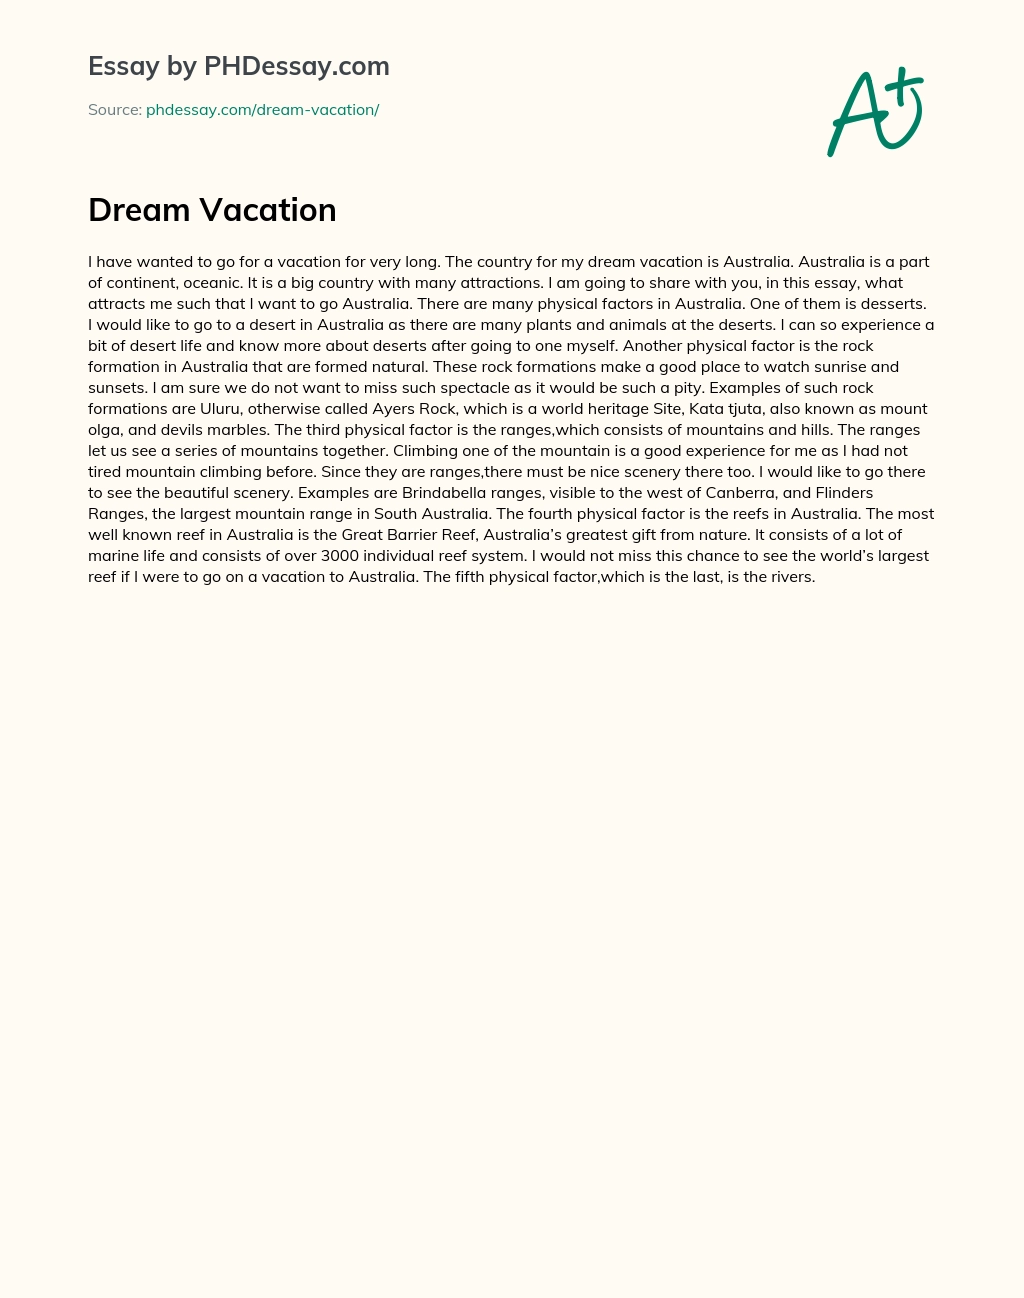 Dream Vacation essay